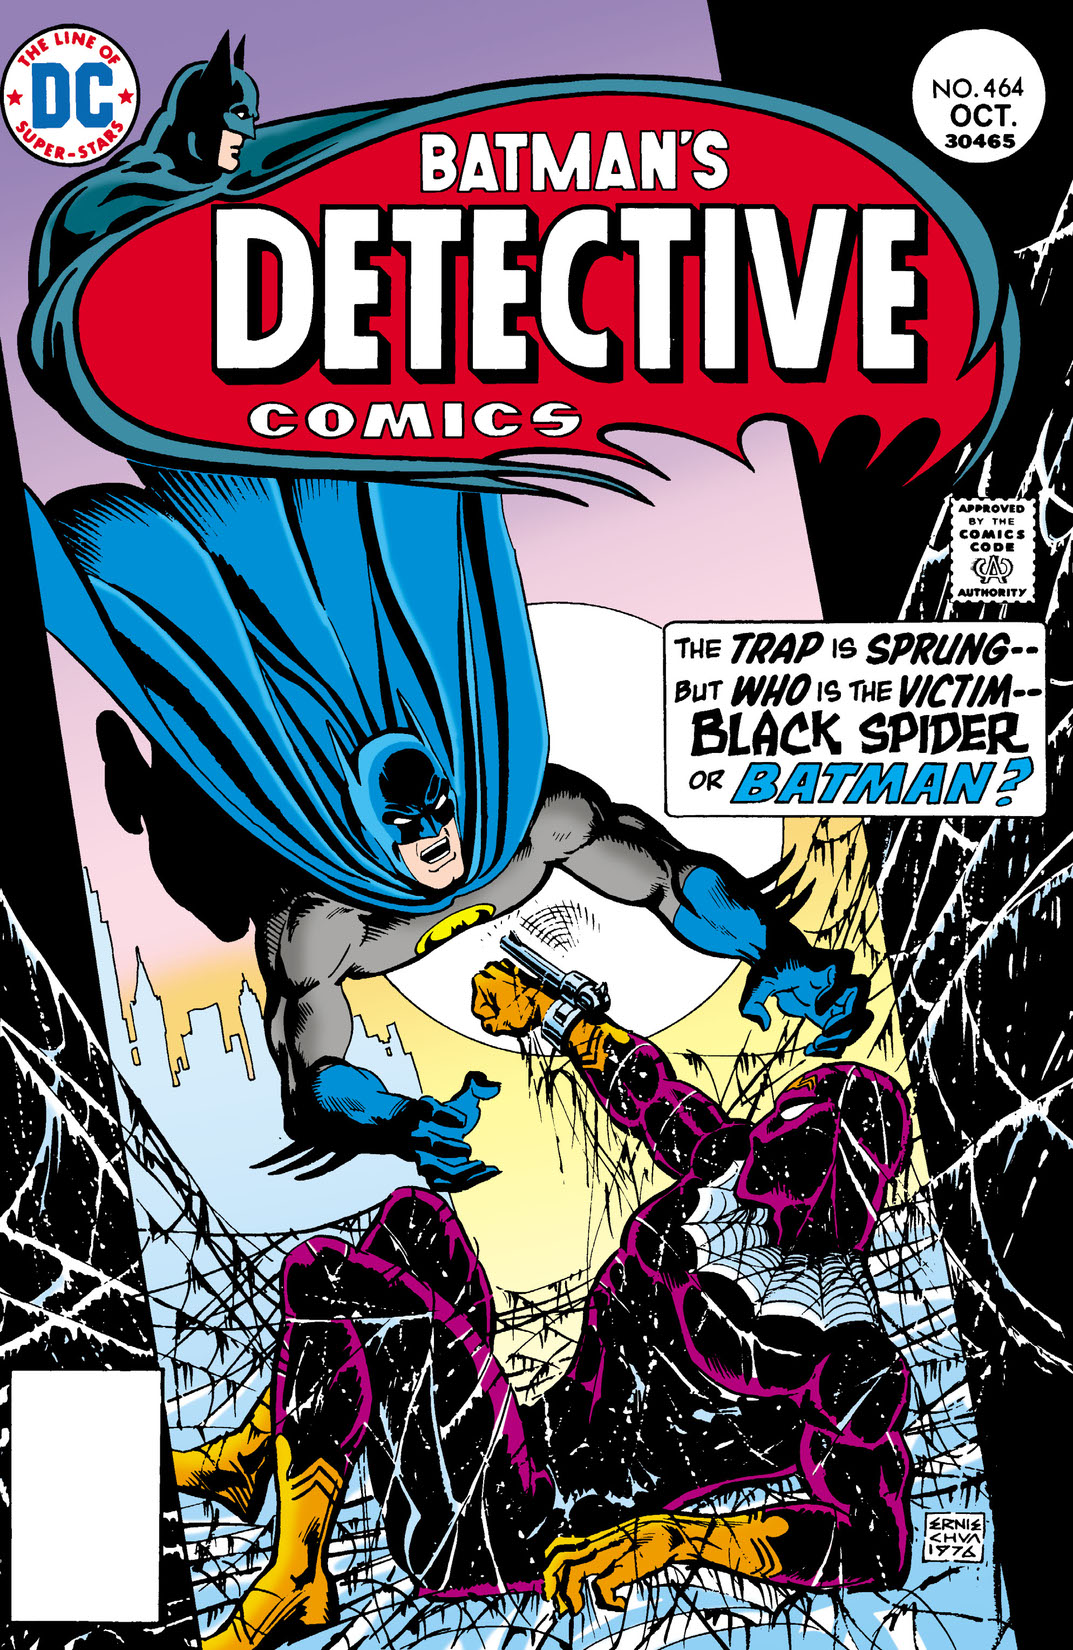 Detective Comics (1937-) #464 preview images